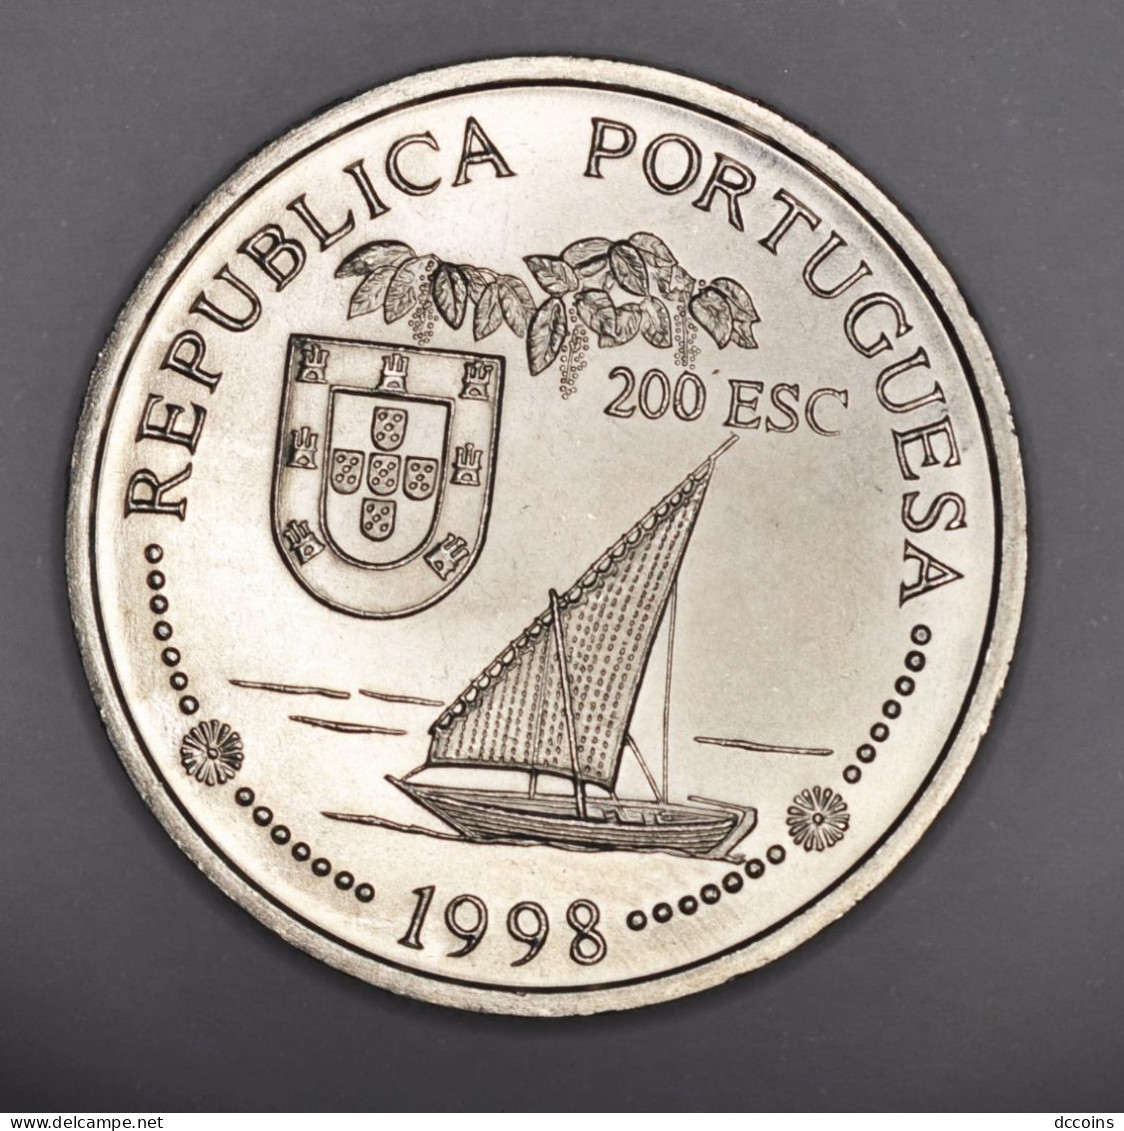 Descobrimentos Portugueses 9ª Serie 200  Esc. India Year 1998 - Portogallo